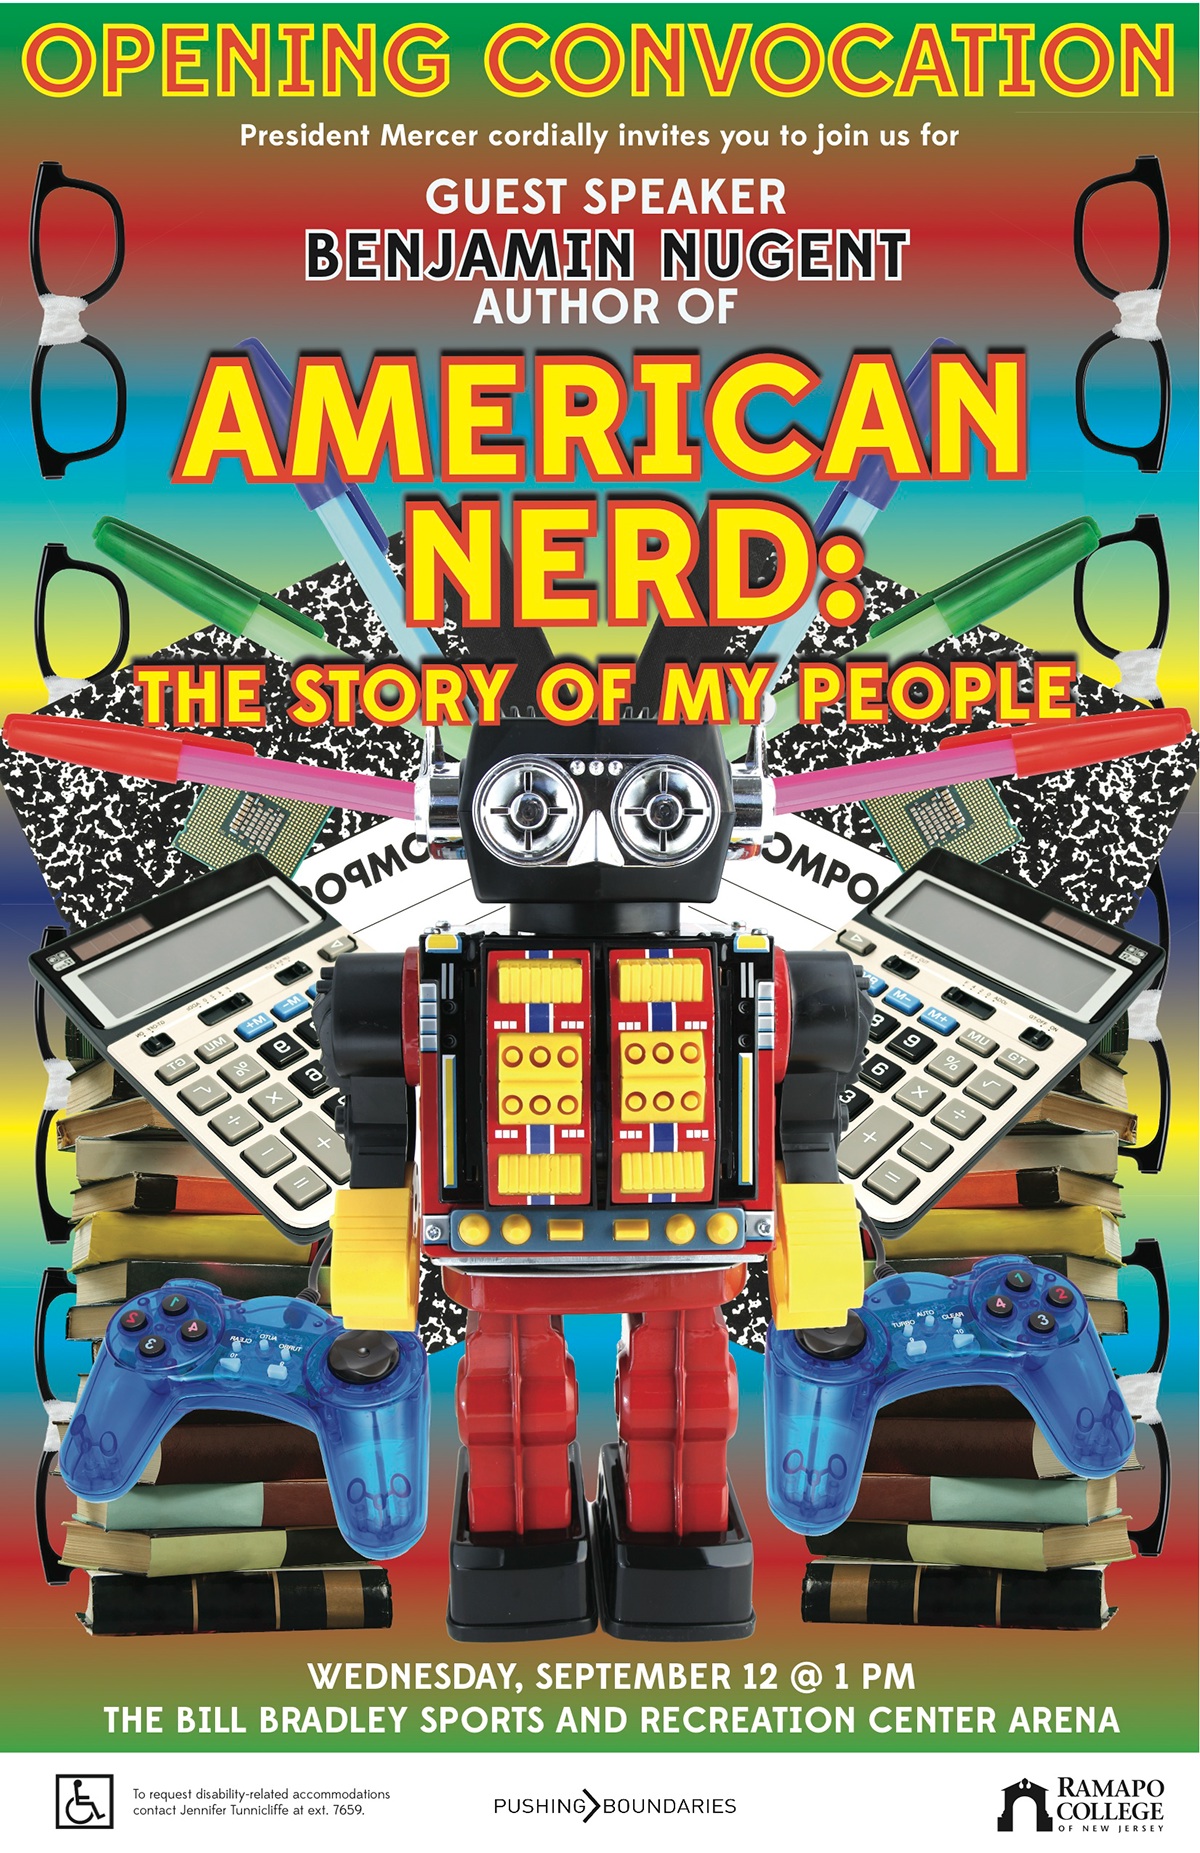 American Nerd poster nerd color Video Games robot Ramapo College  melissa piombo collage